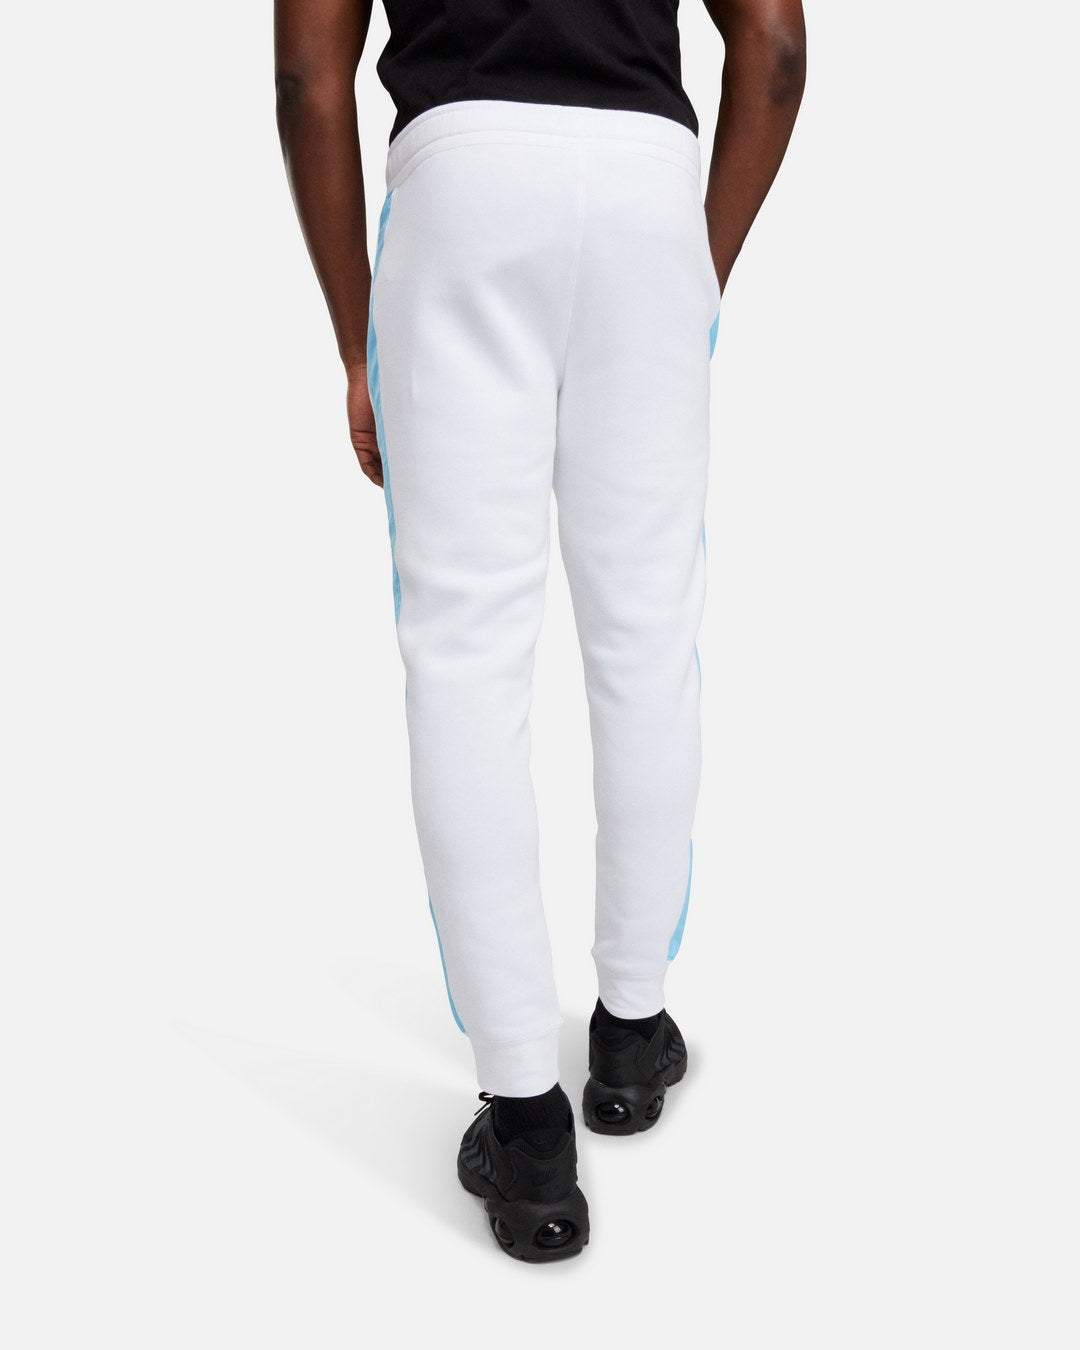 Pantalon Nike Sportswear - Weiß/Blau